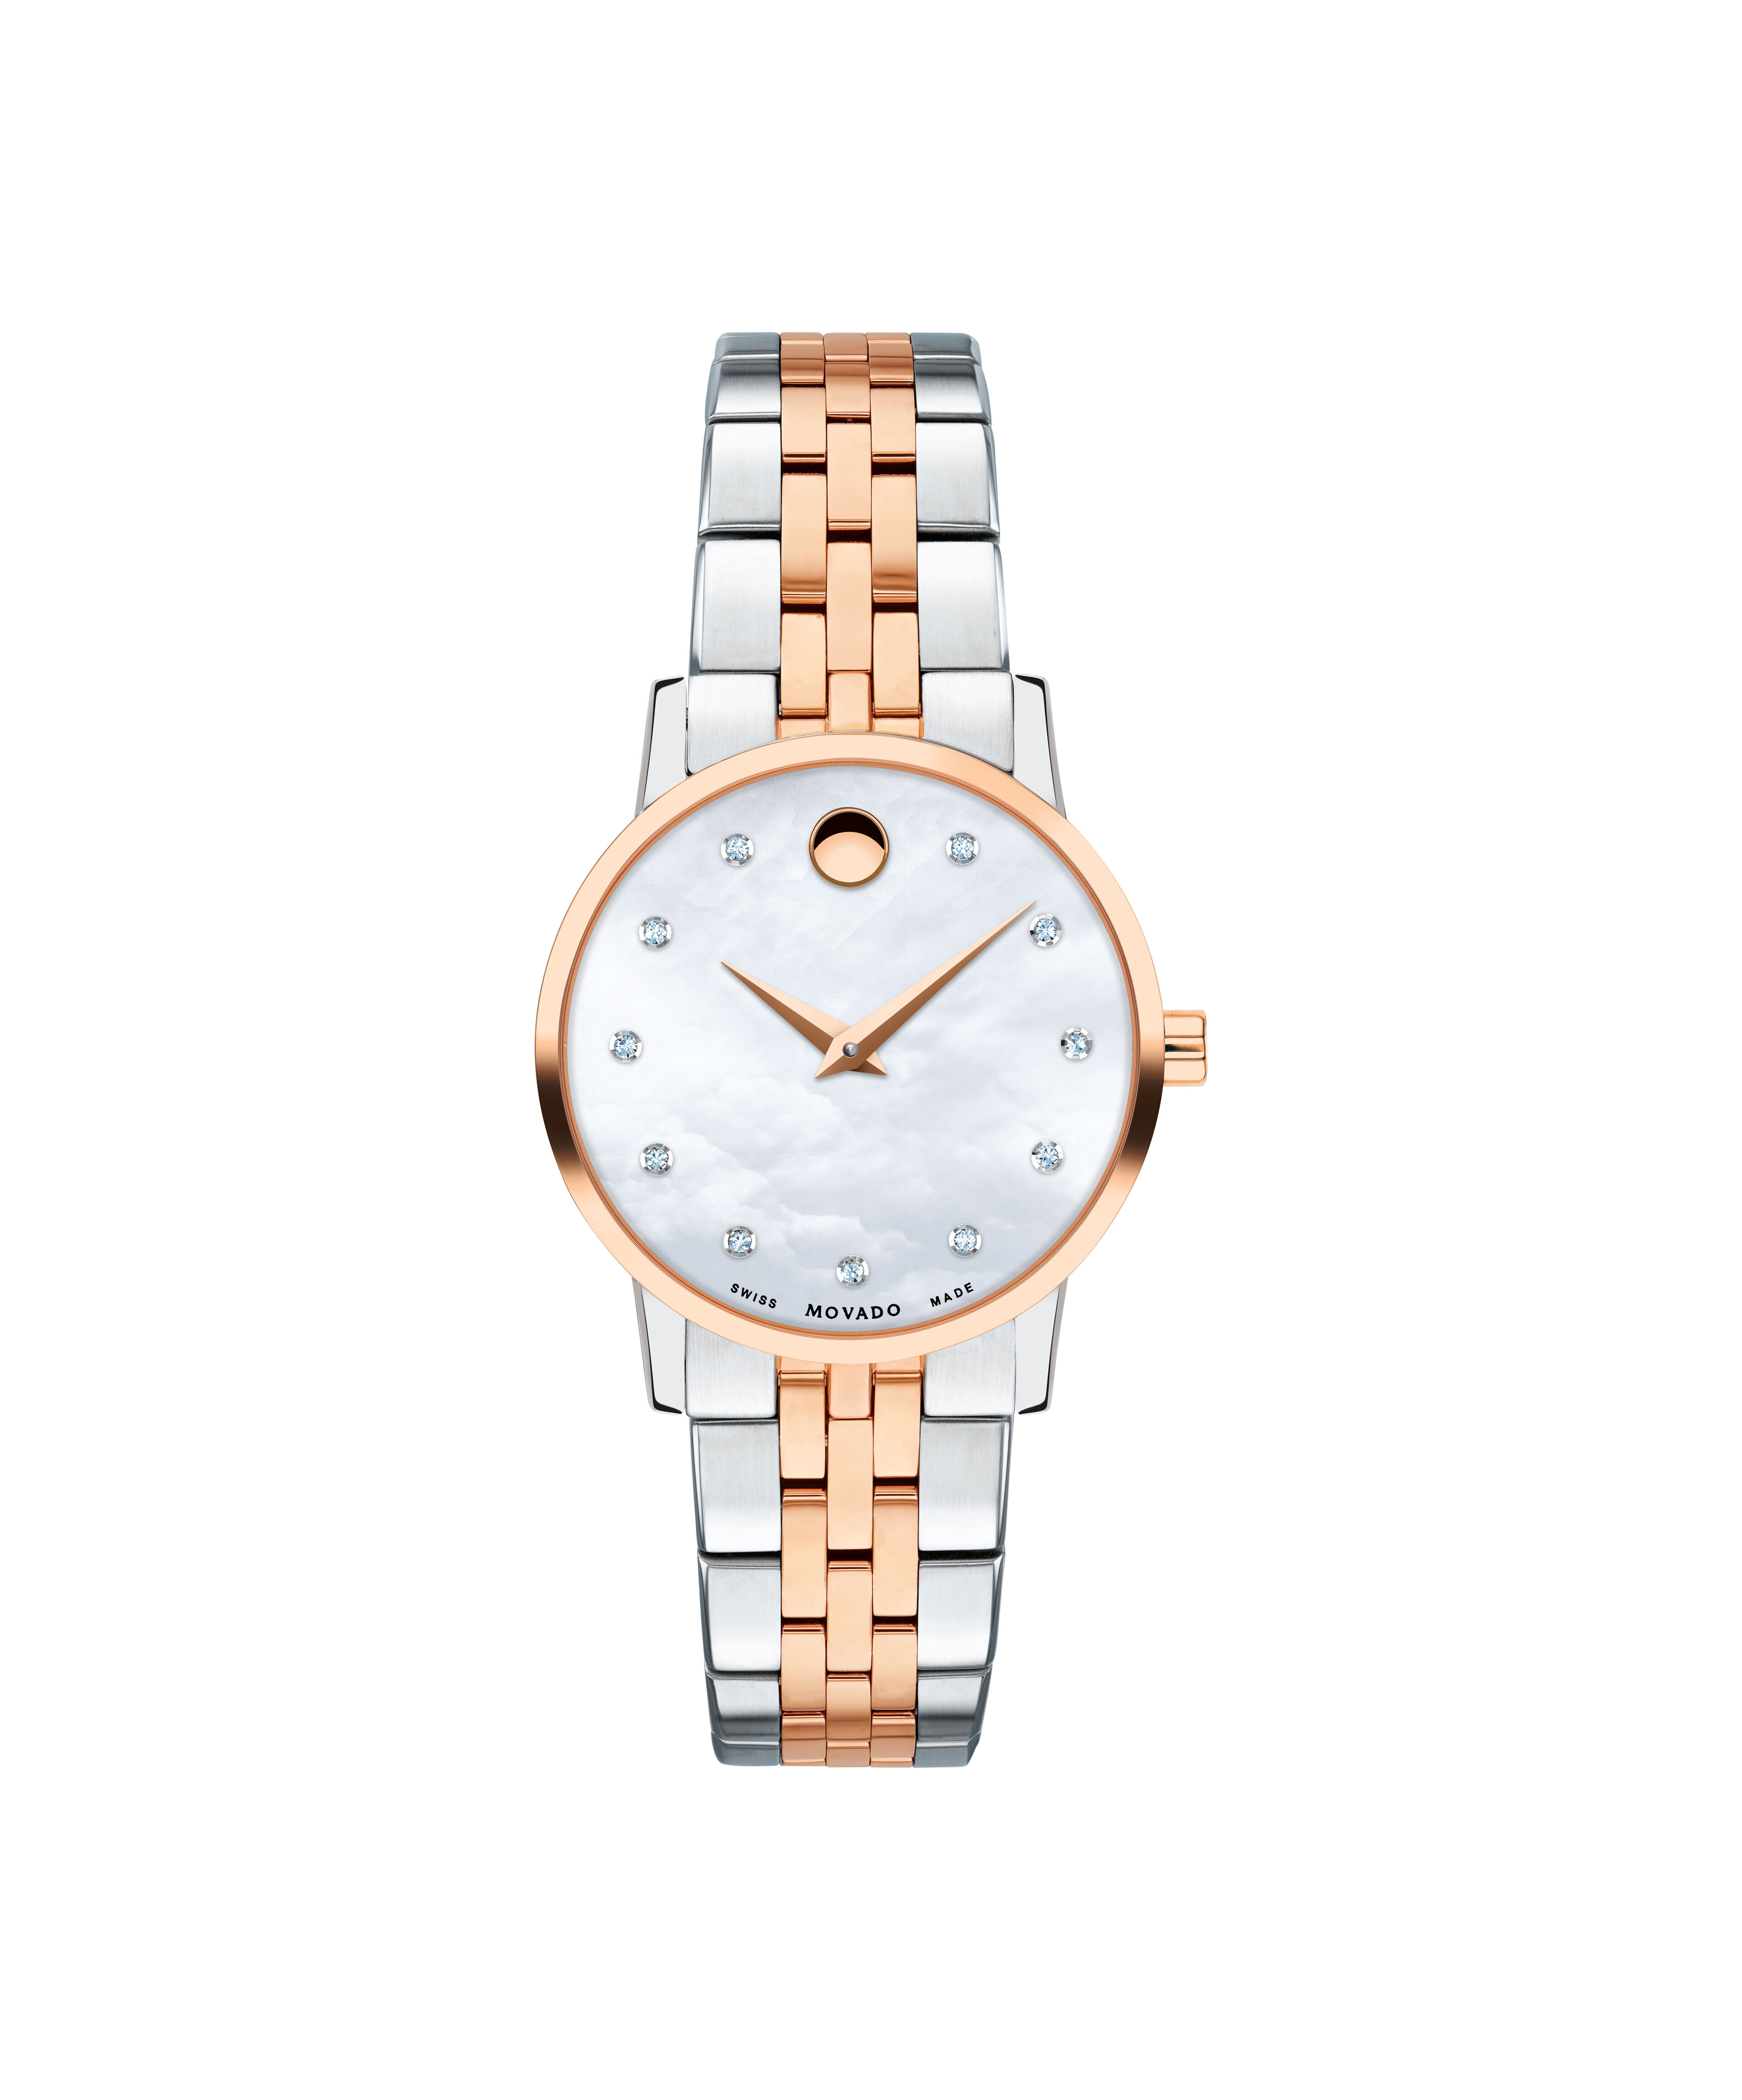 Replica Cartier Watch Forum